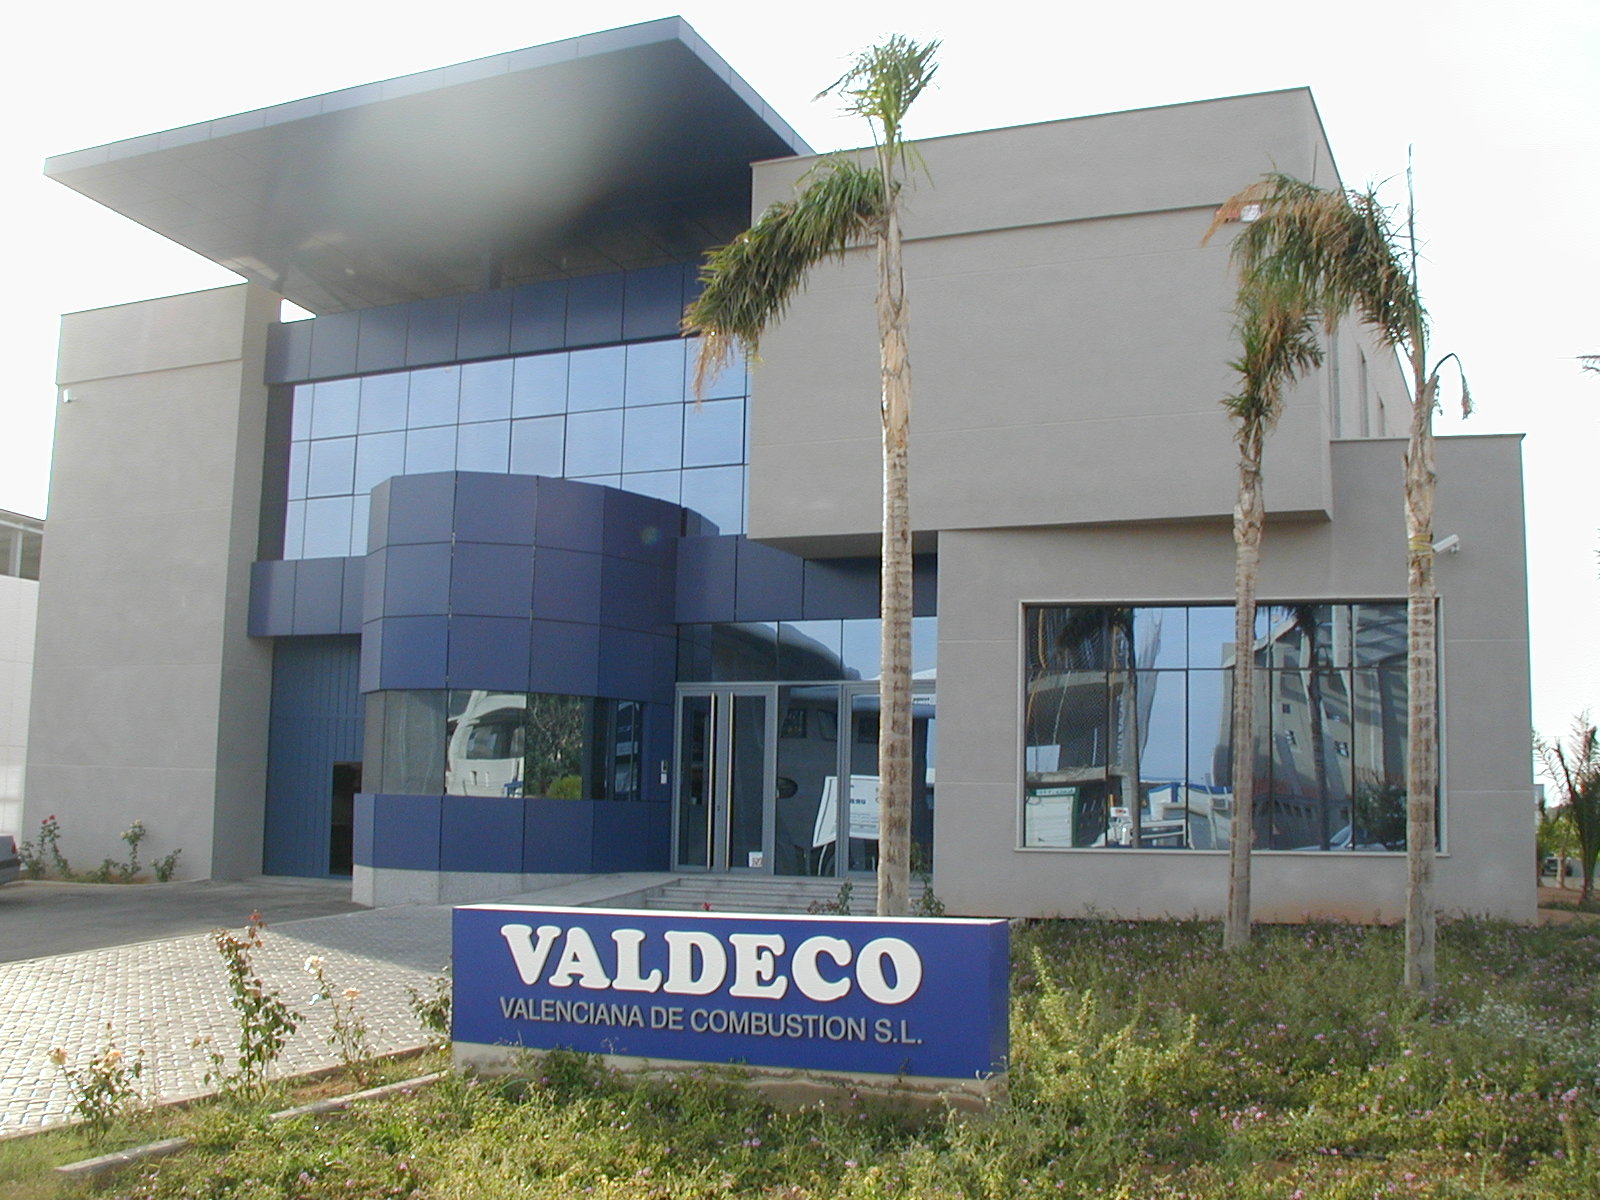 Images Valdeco